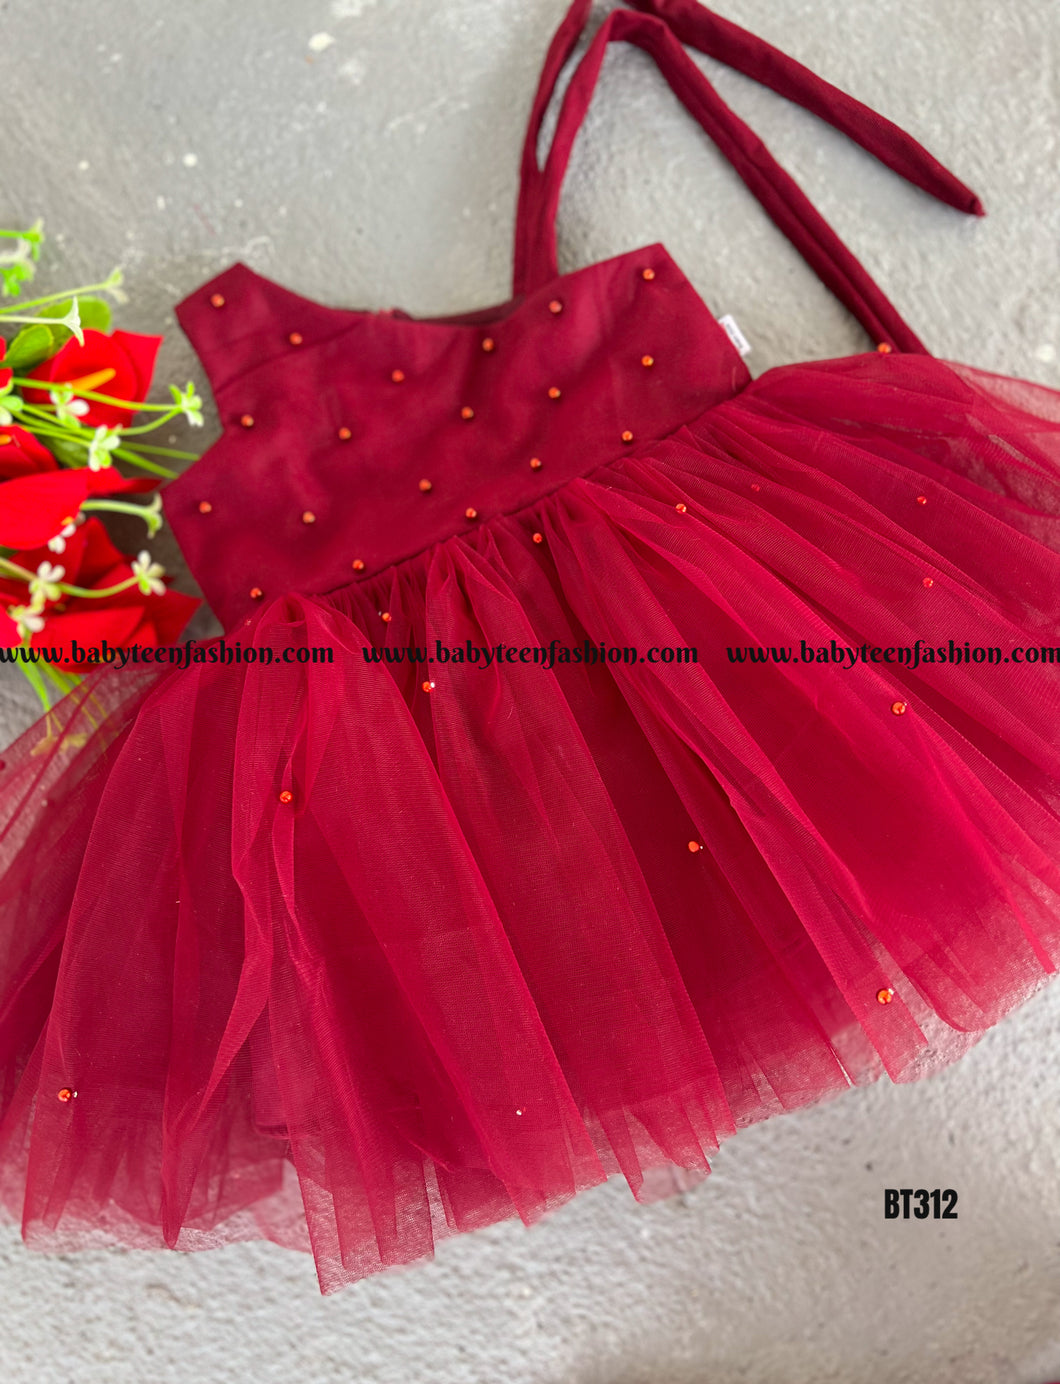 BT312 Little Star Red Delight Dress